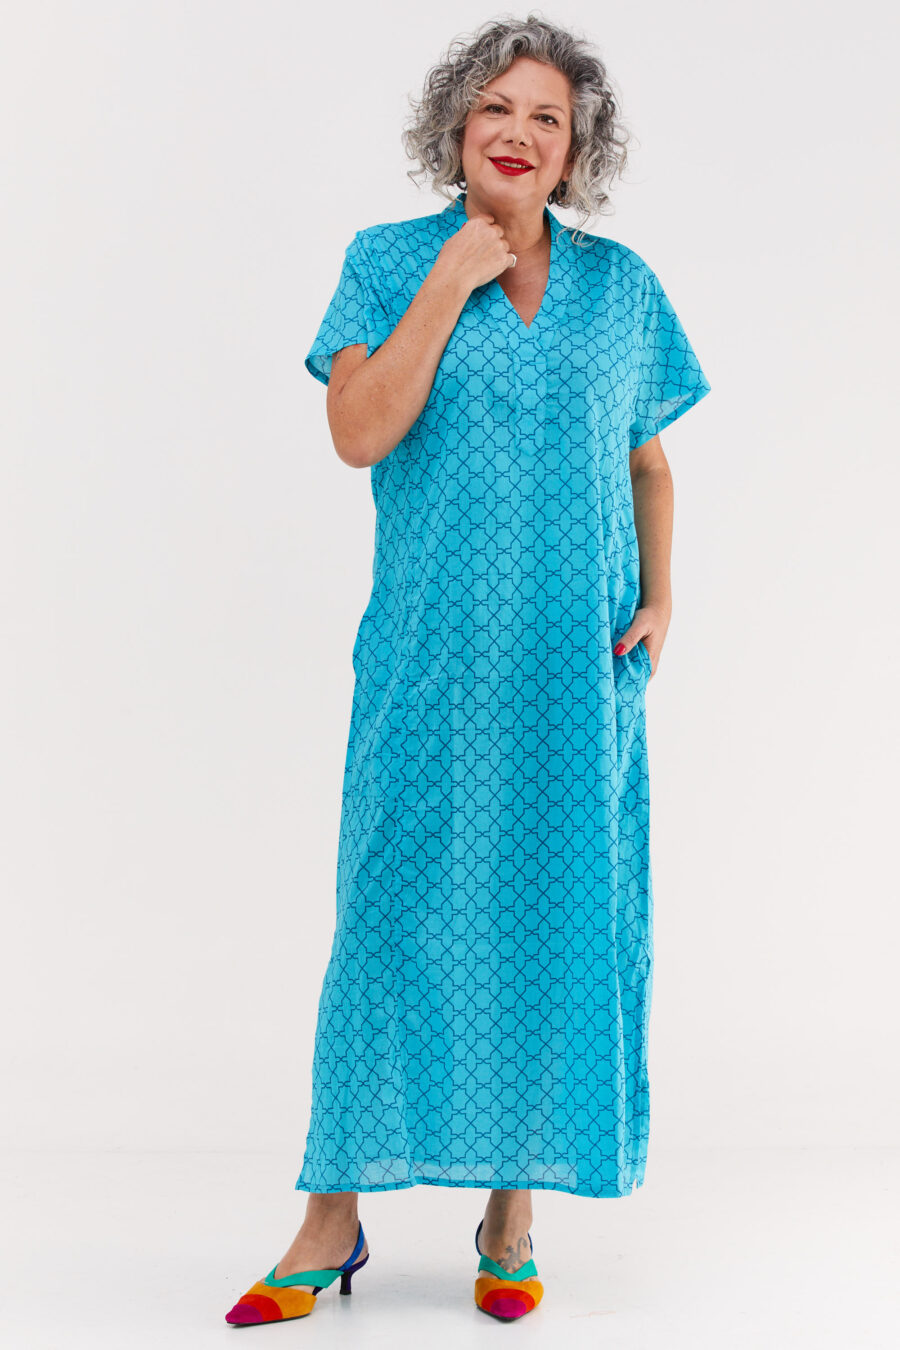 Jalabiya dress | Uniquely designed dress - tourqouise dress with dark blue geometric print by comfort zone boutique